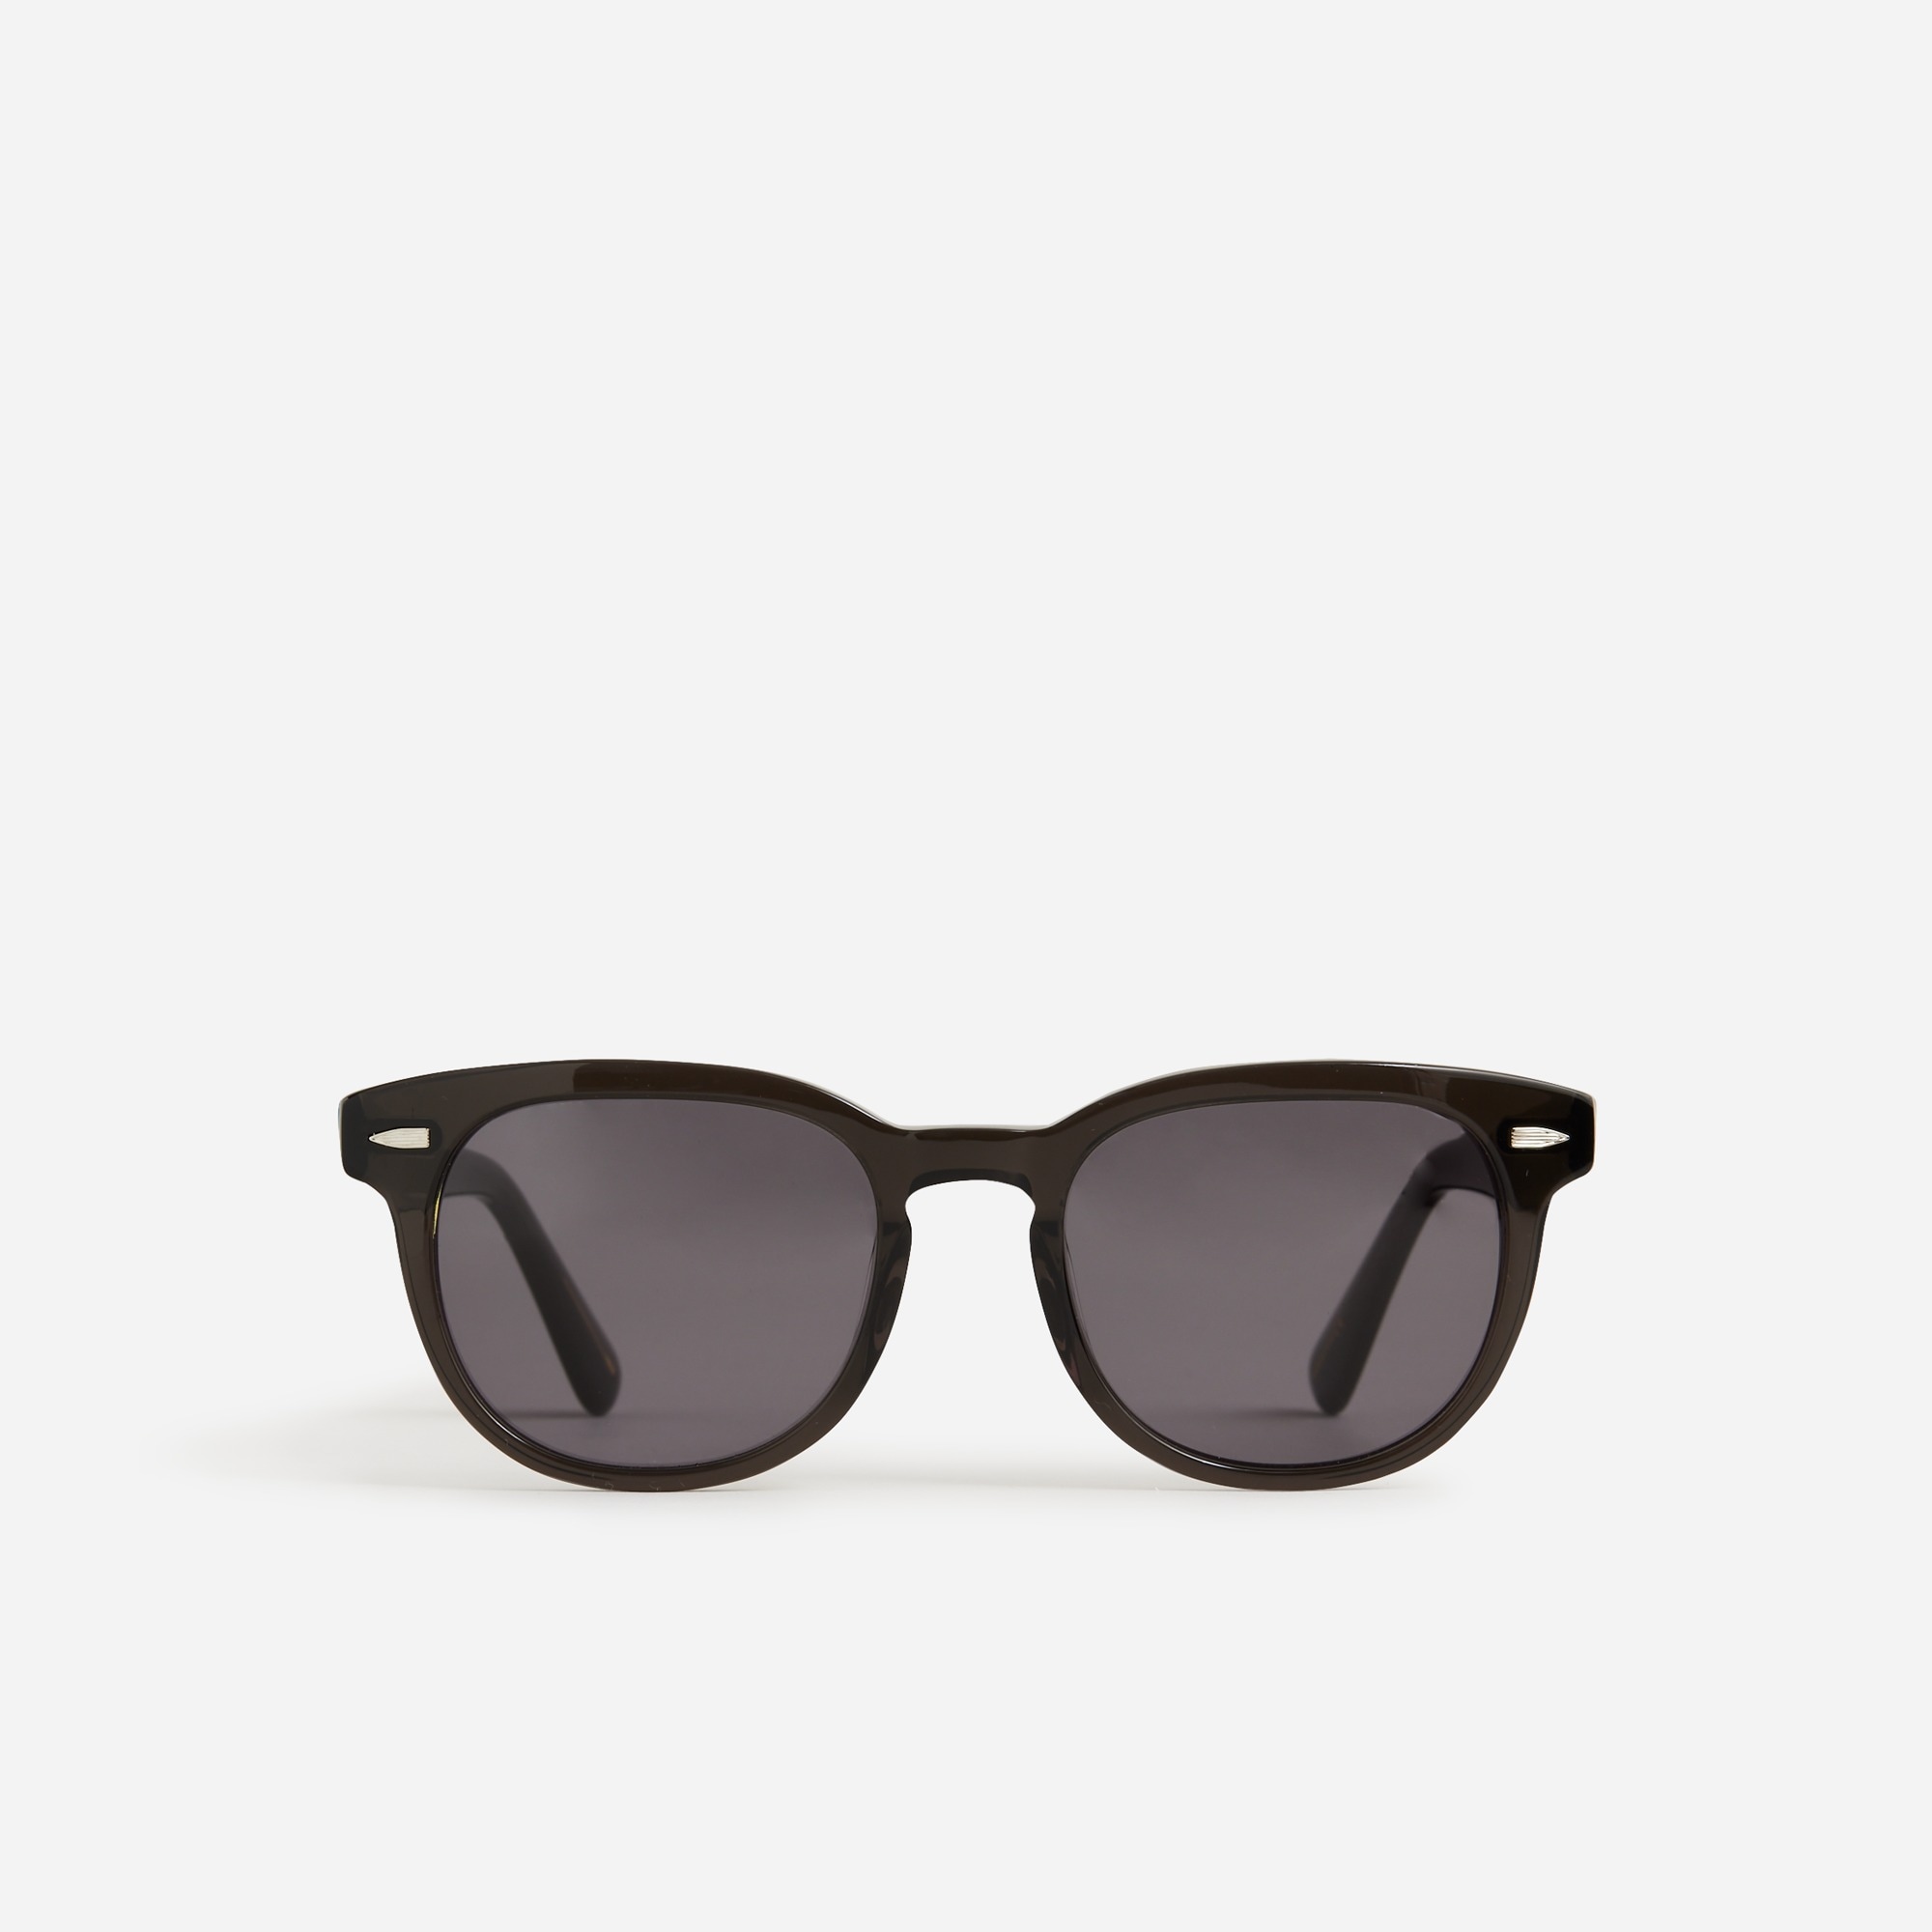  Dock sunglasses